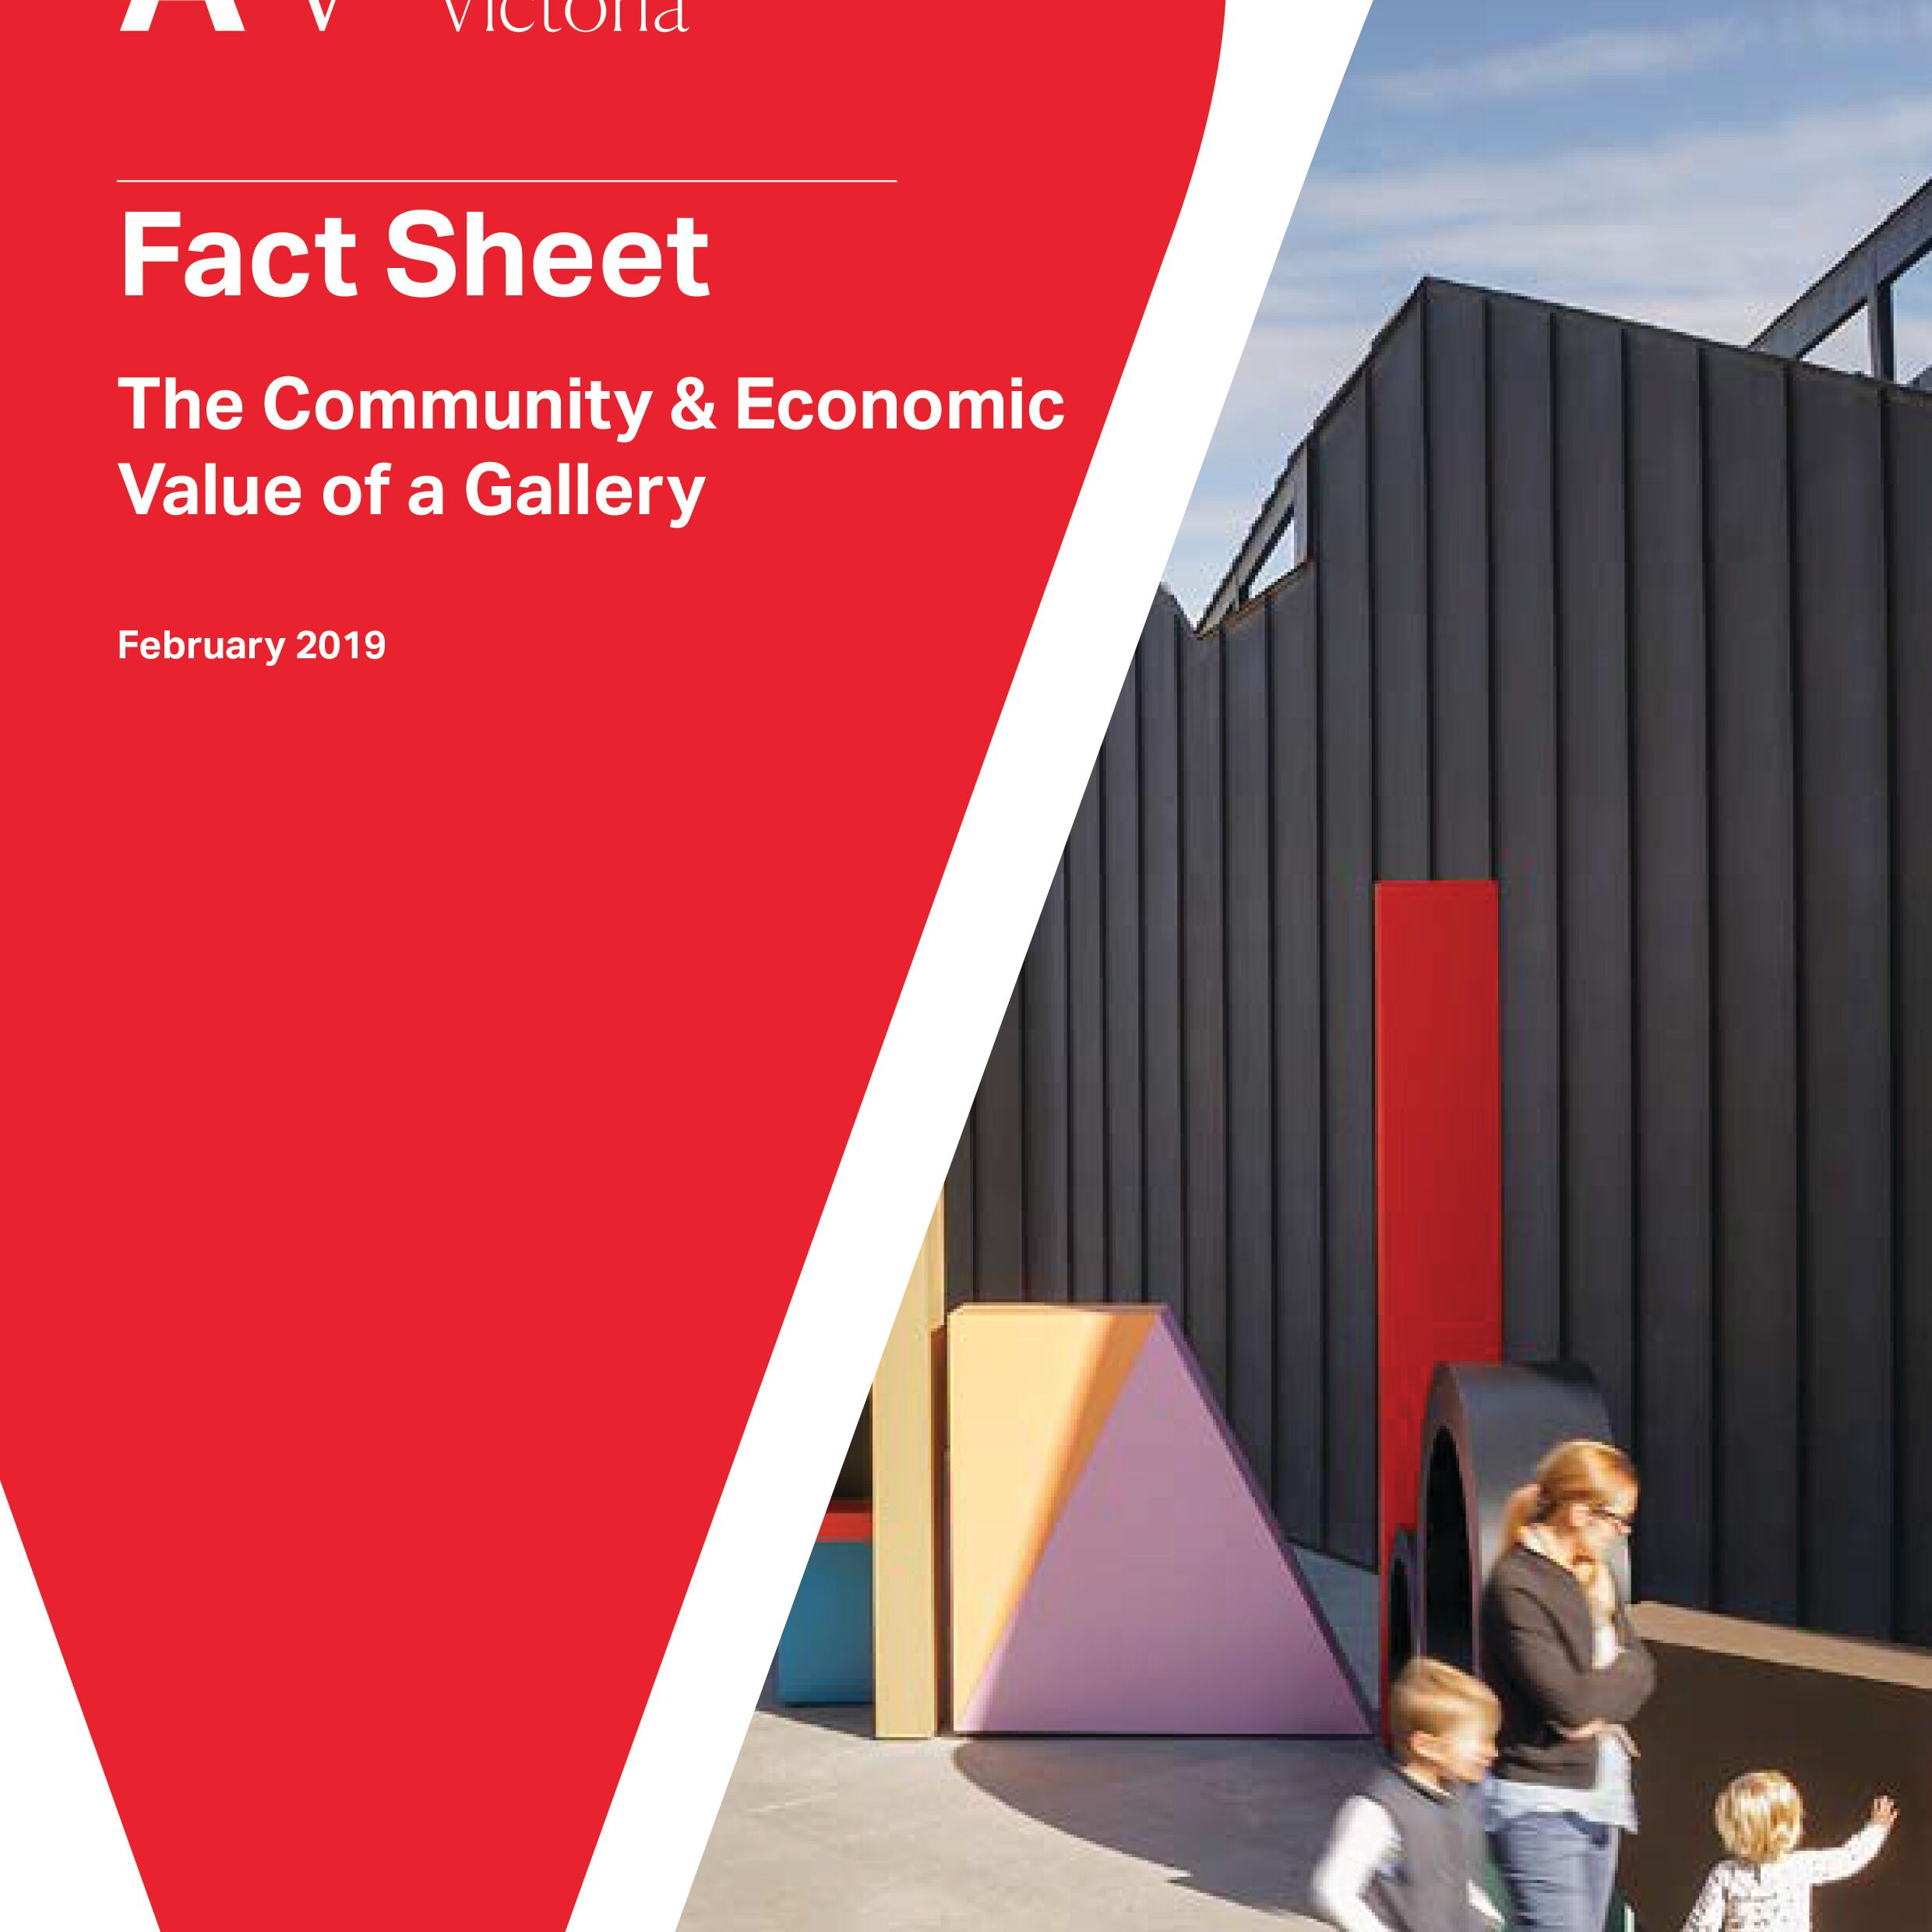 PGAV Fact Sheet Community Value Cover